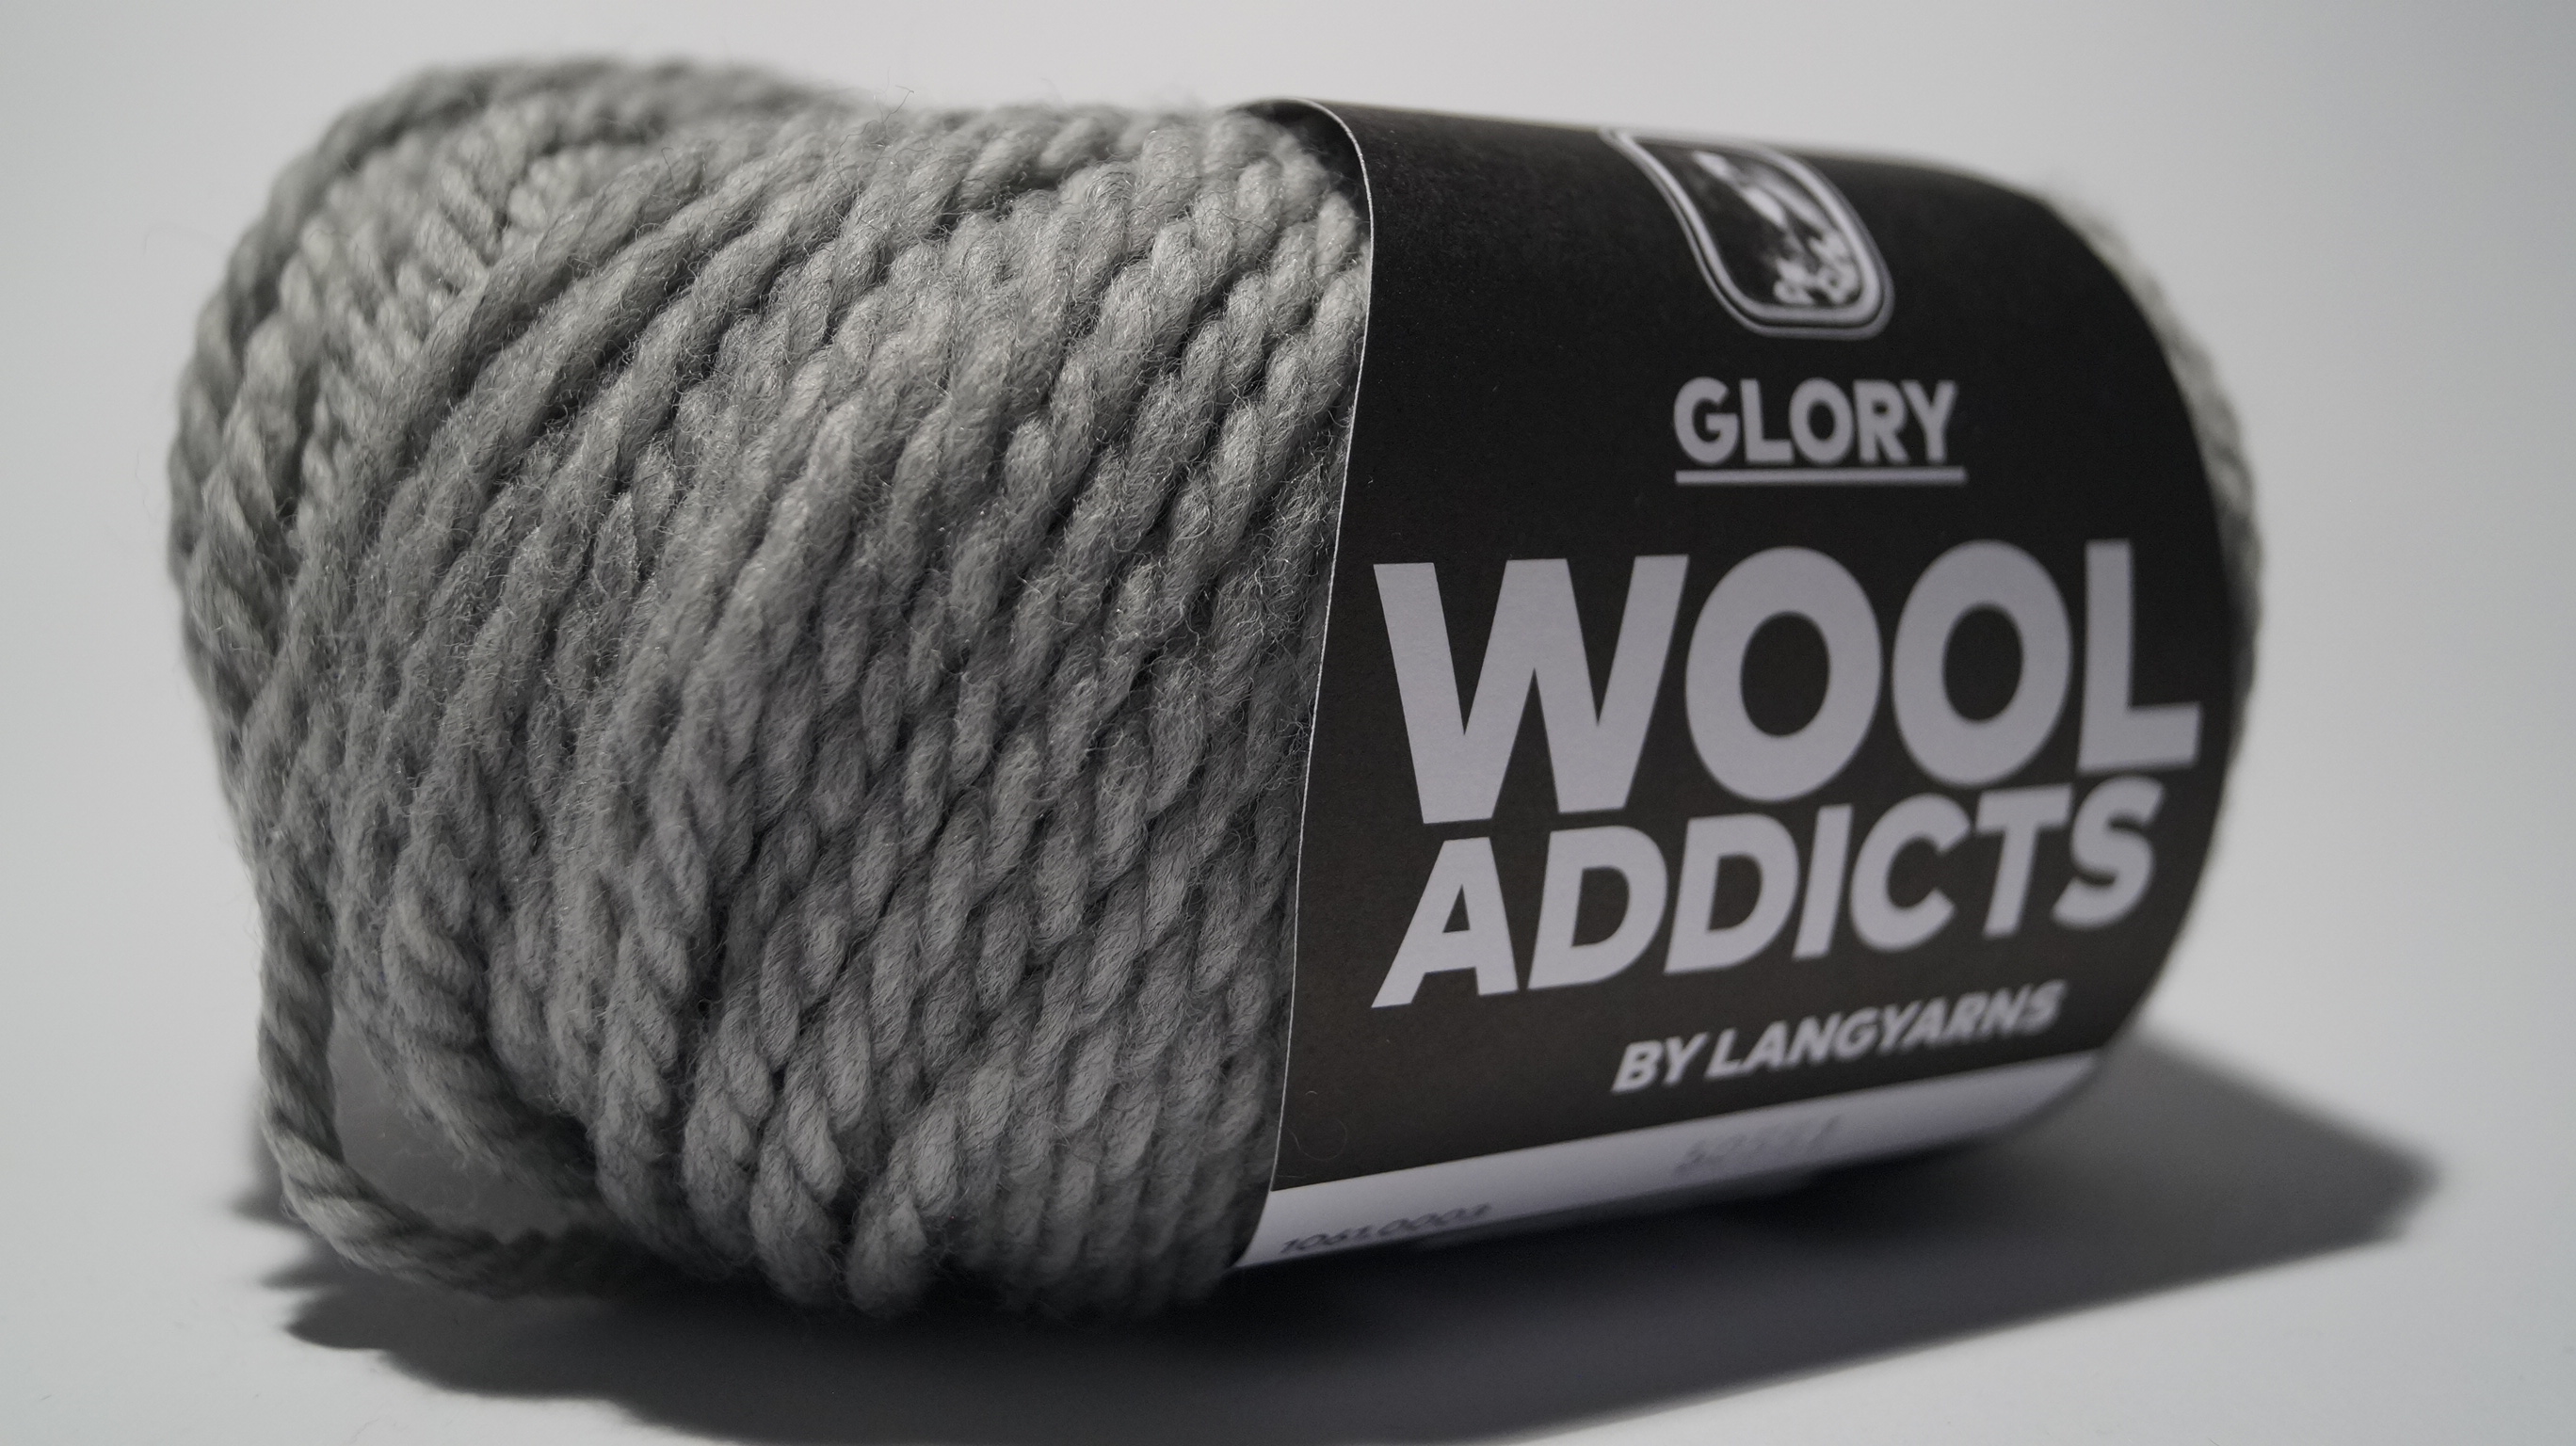 Lang Yarns Glory wool addicts